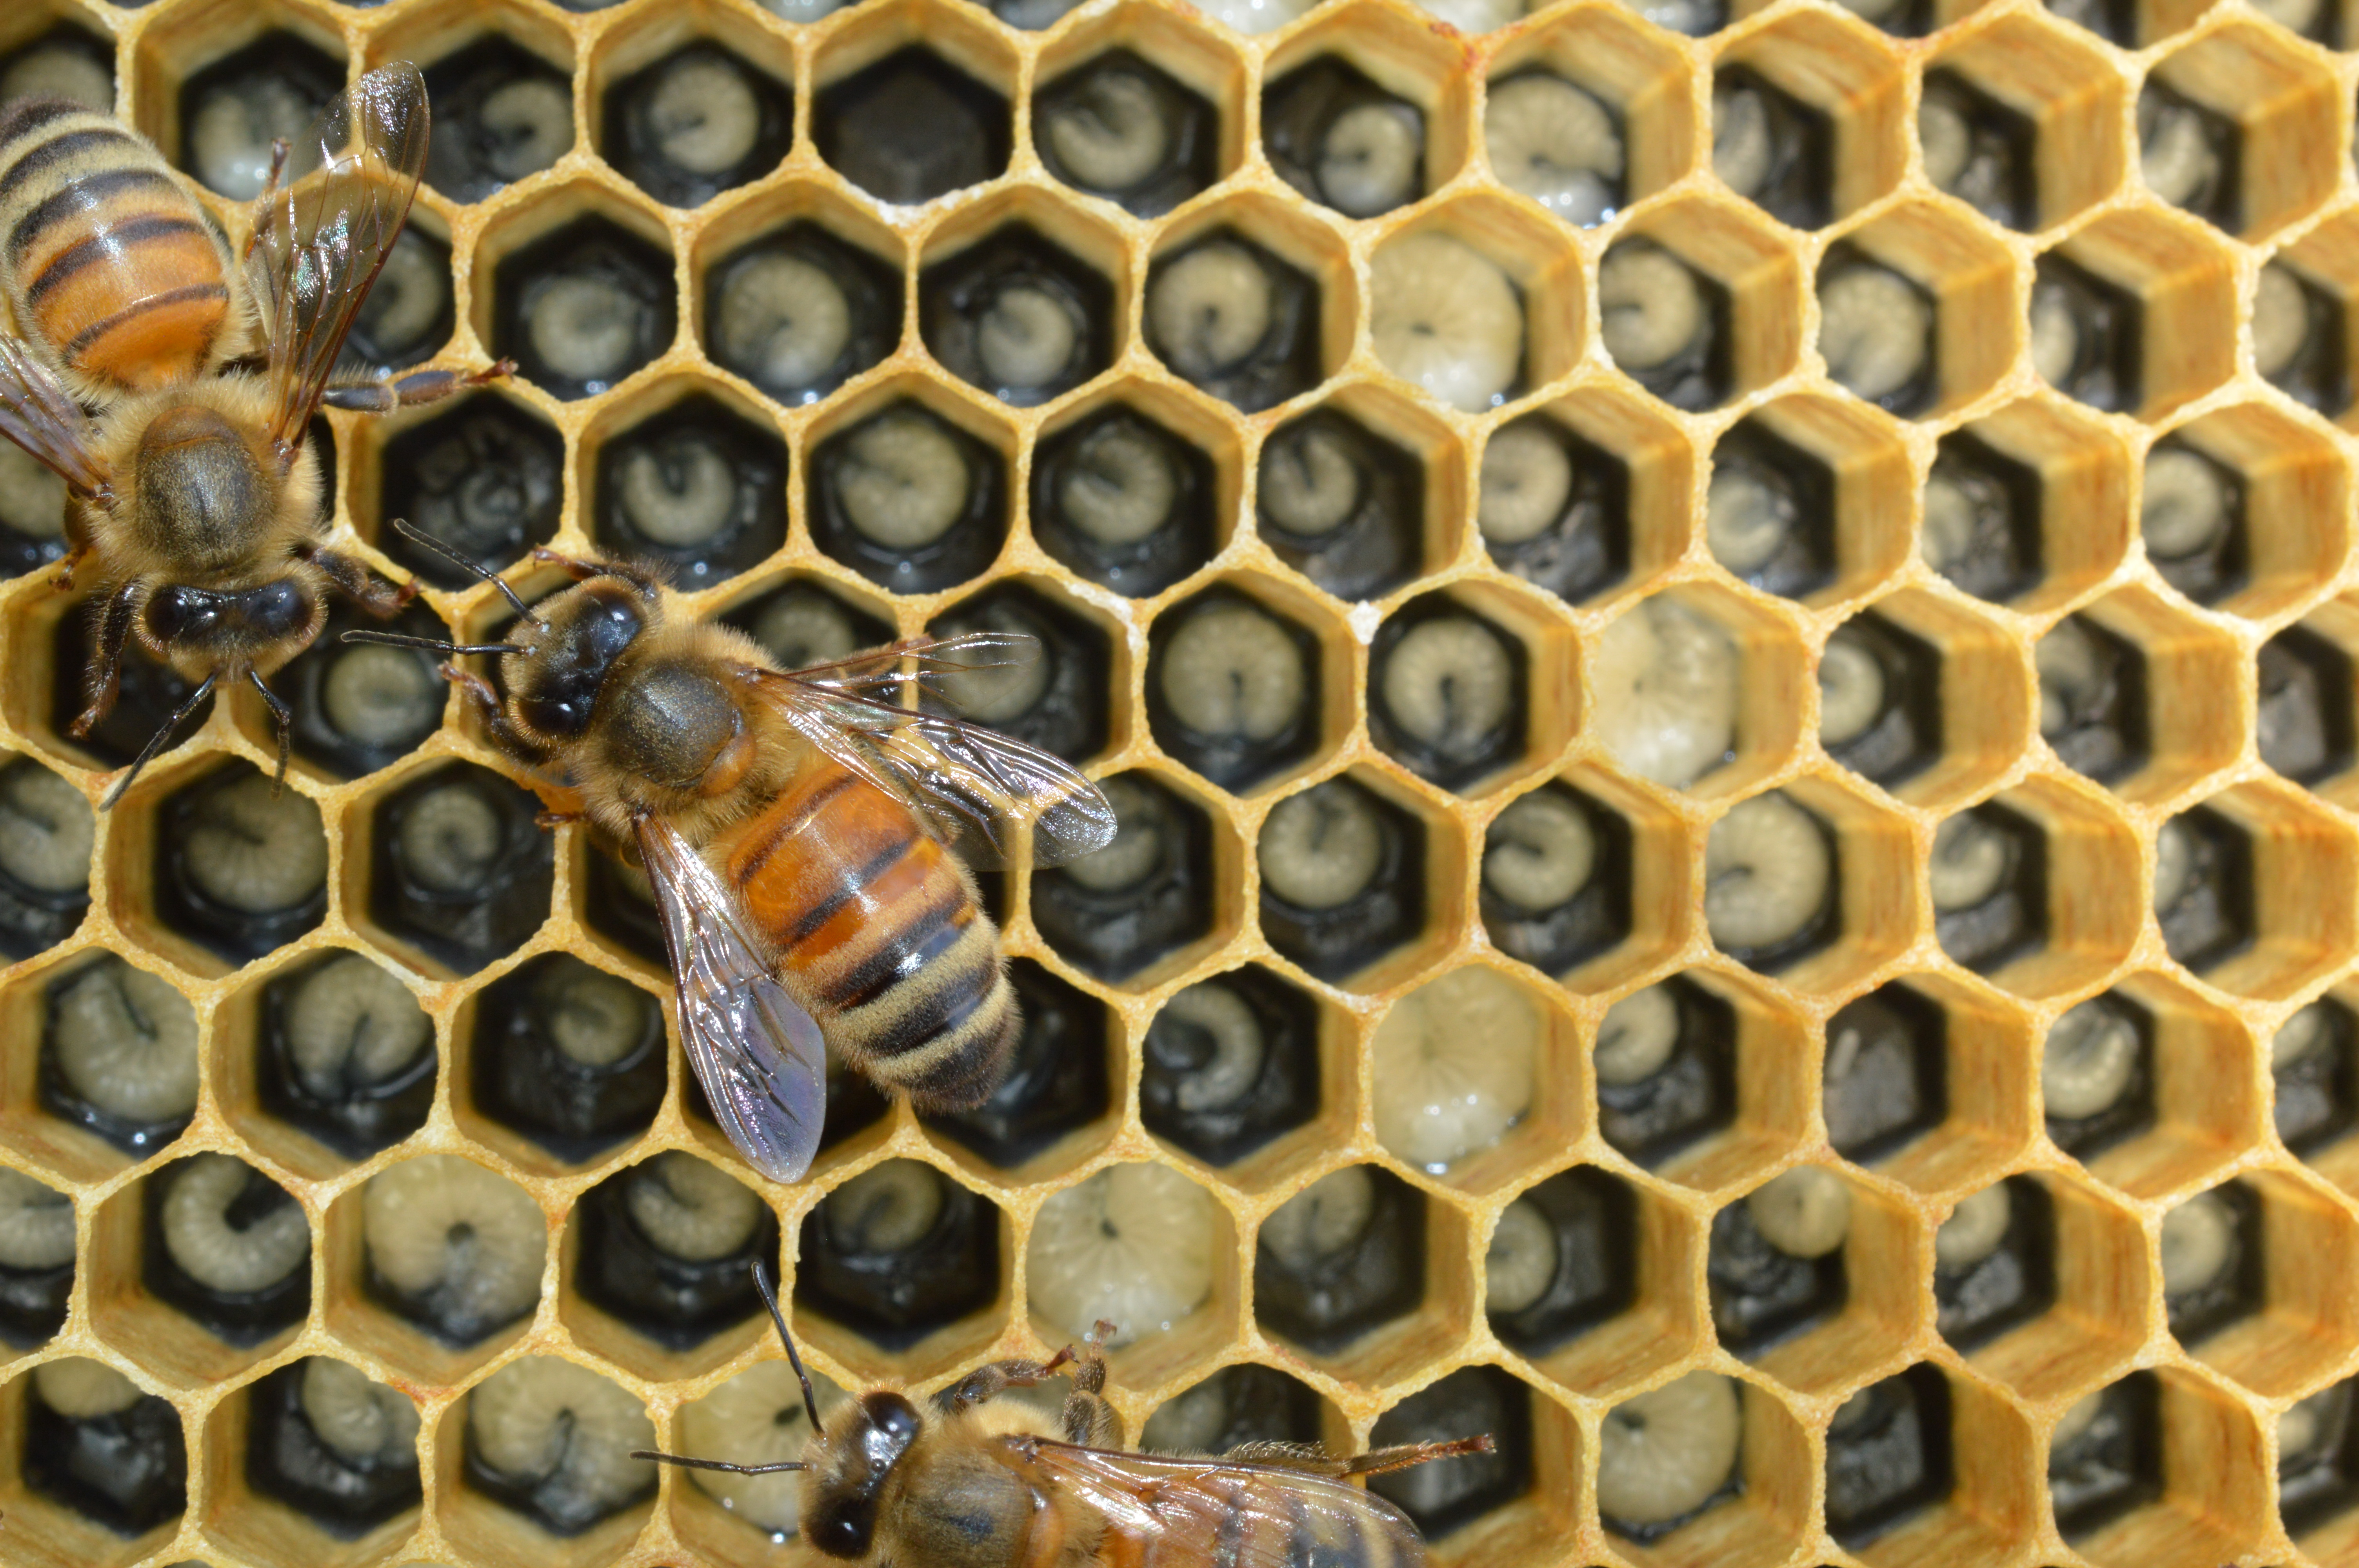 Honey bees working photo by Rachael Bonoan